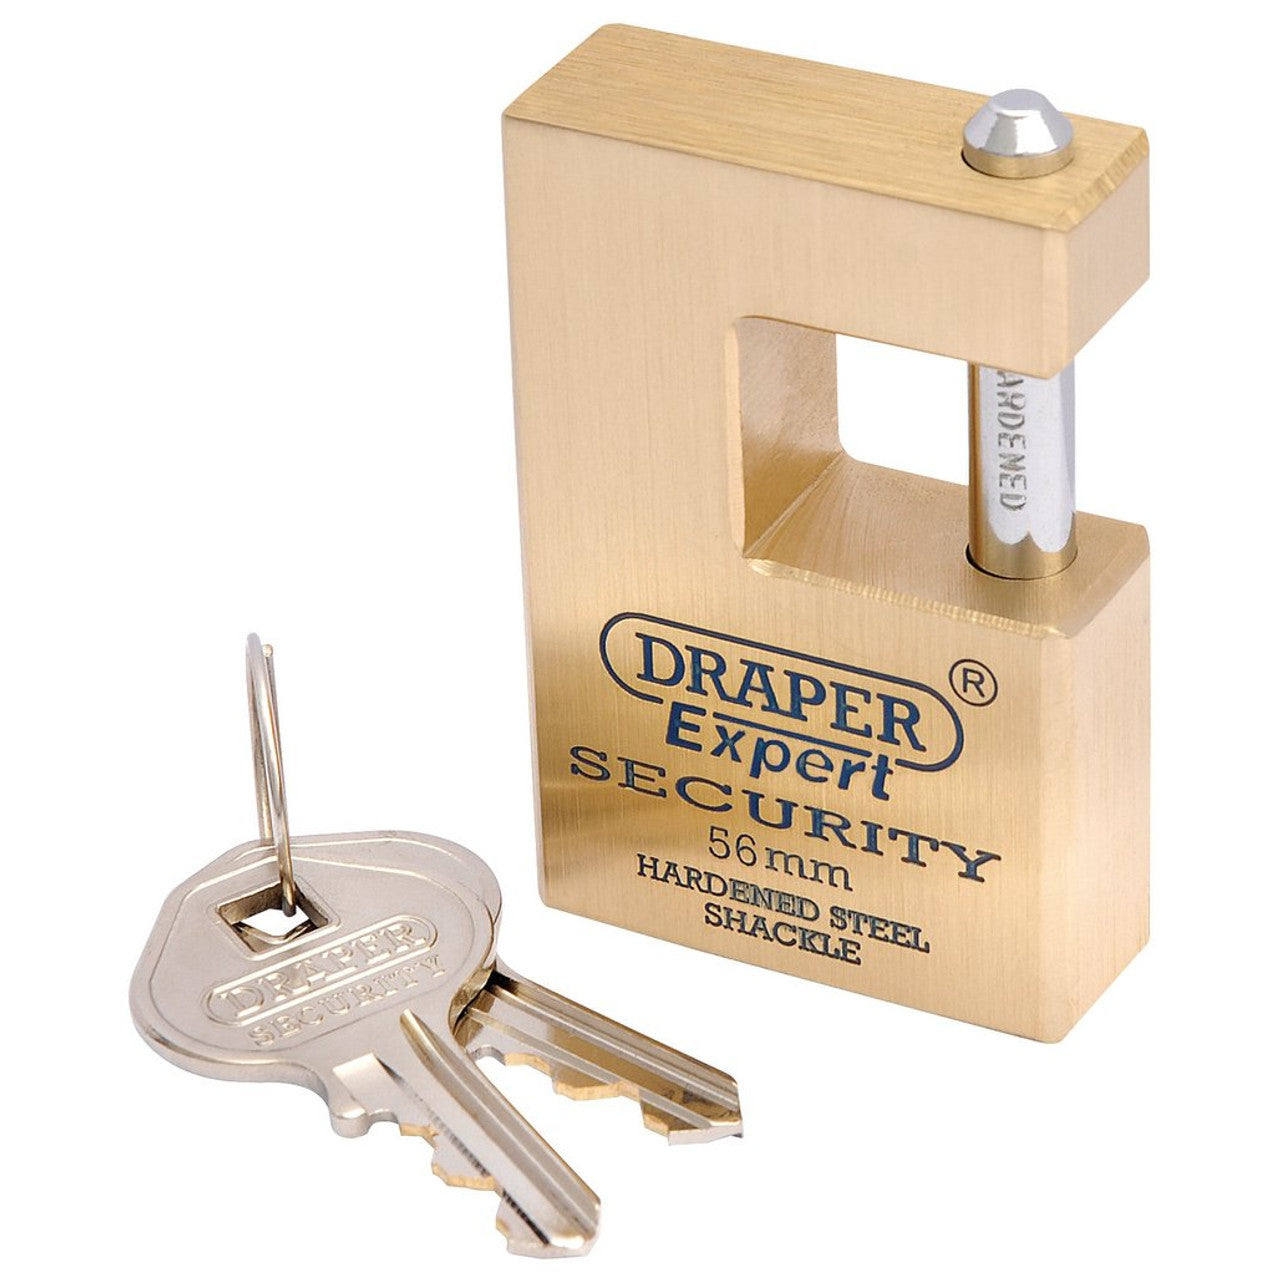 Draper 64200 Draper Expert Close Shackle Solid Brass Padlock with Hardened Steel Shackle, 2 Keys, 56mm